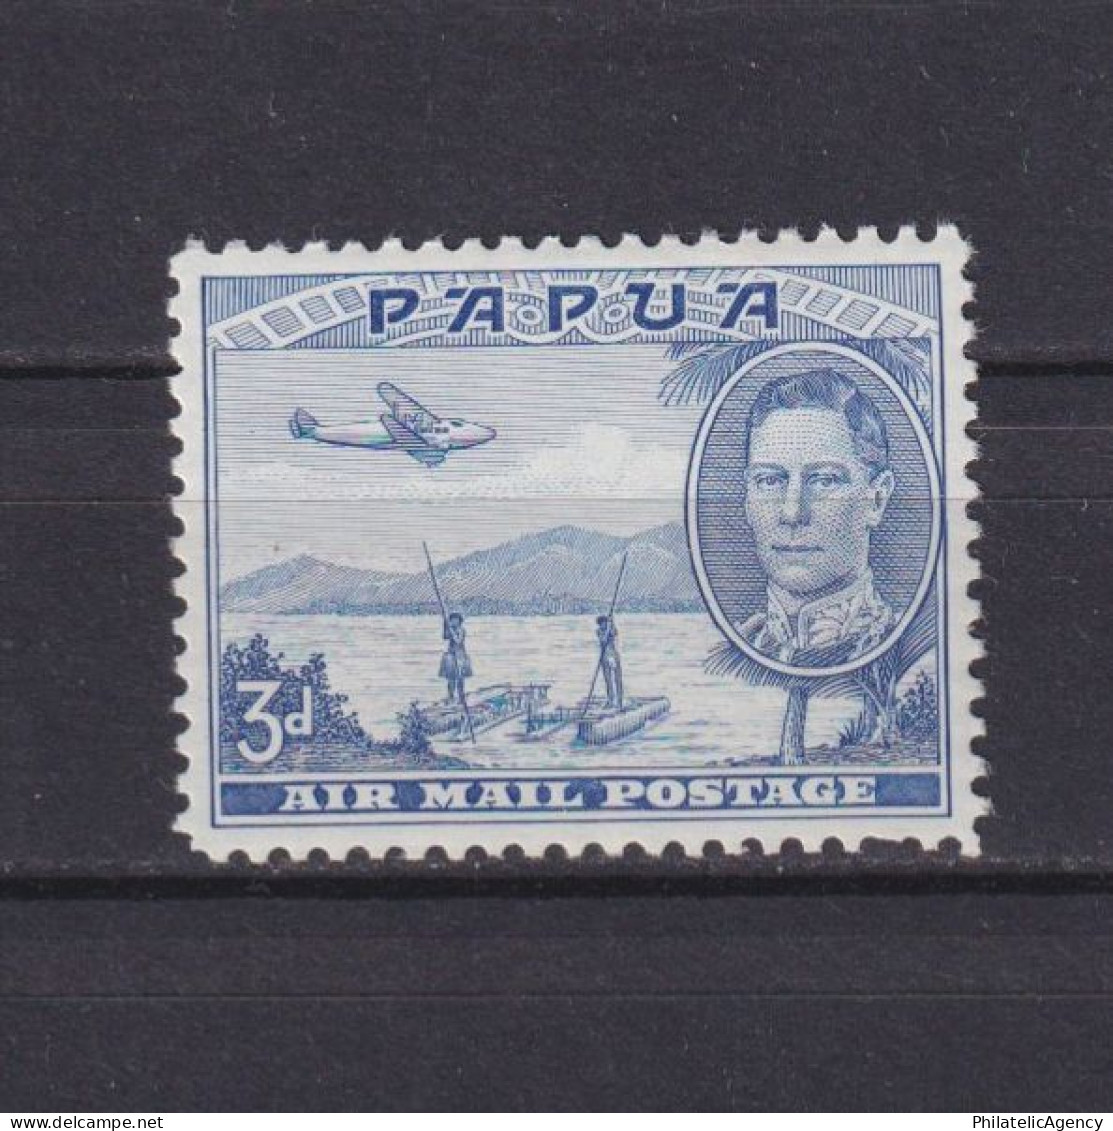 PAPUA 1939, SG #164, Air Mail, MLH - Papouasie-Nouvelle-Guinée